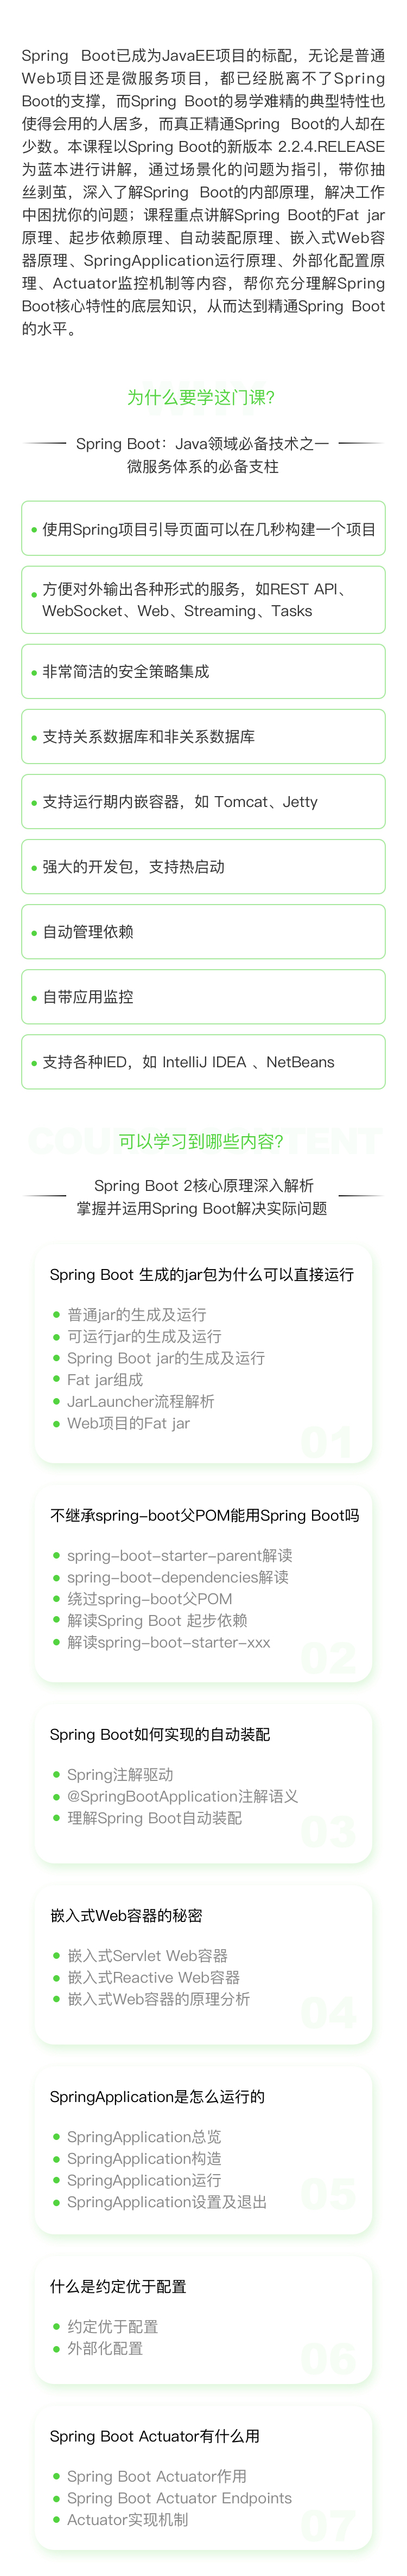 Spring Boot 2核心特性原理深入解析 提升课 博学谷